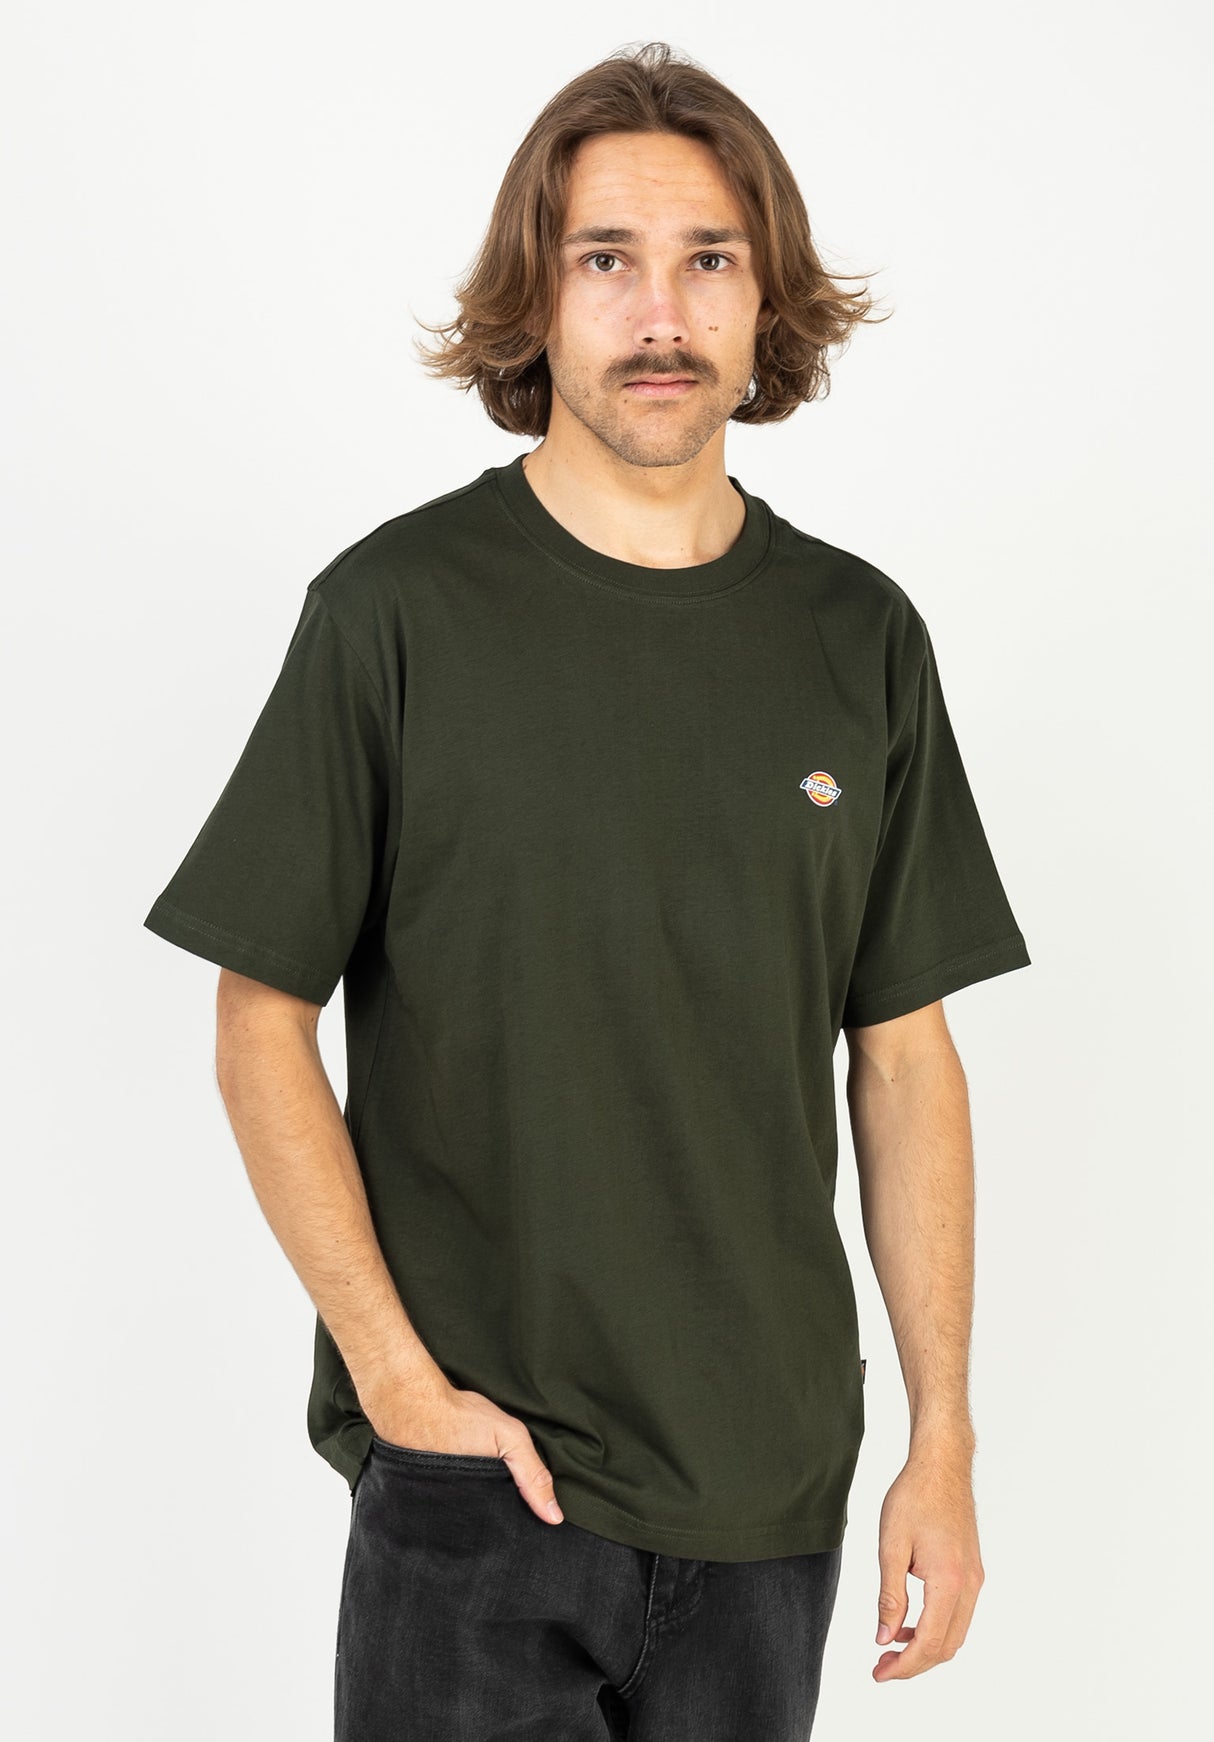 Mapleton Dickies T-Shirt in olive-green for TITUS – Men